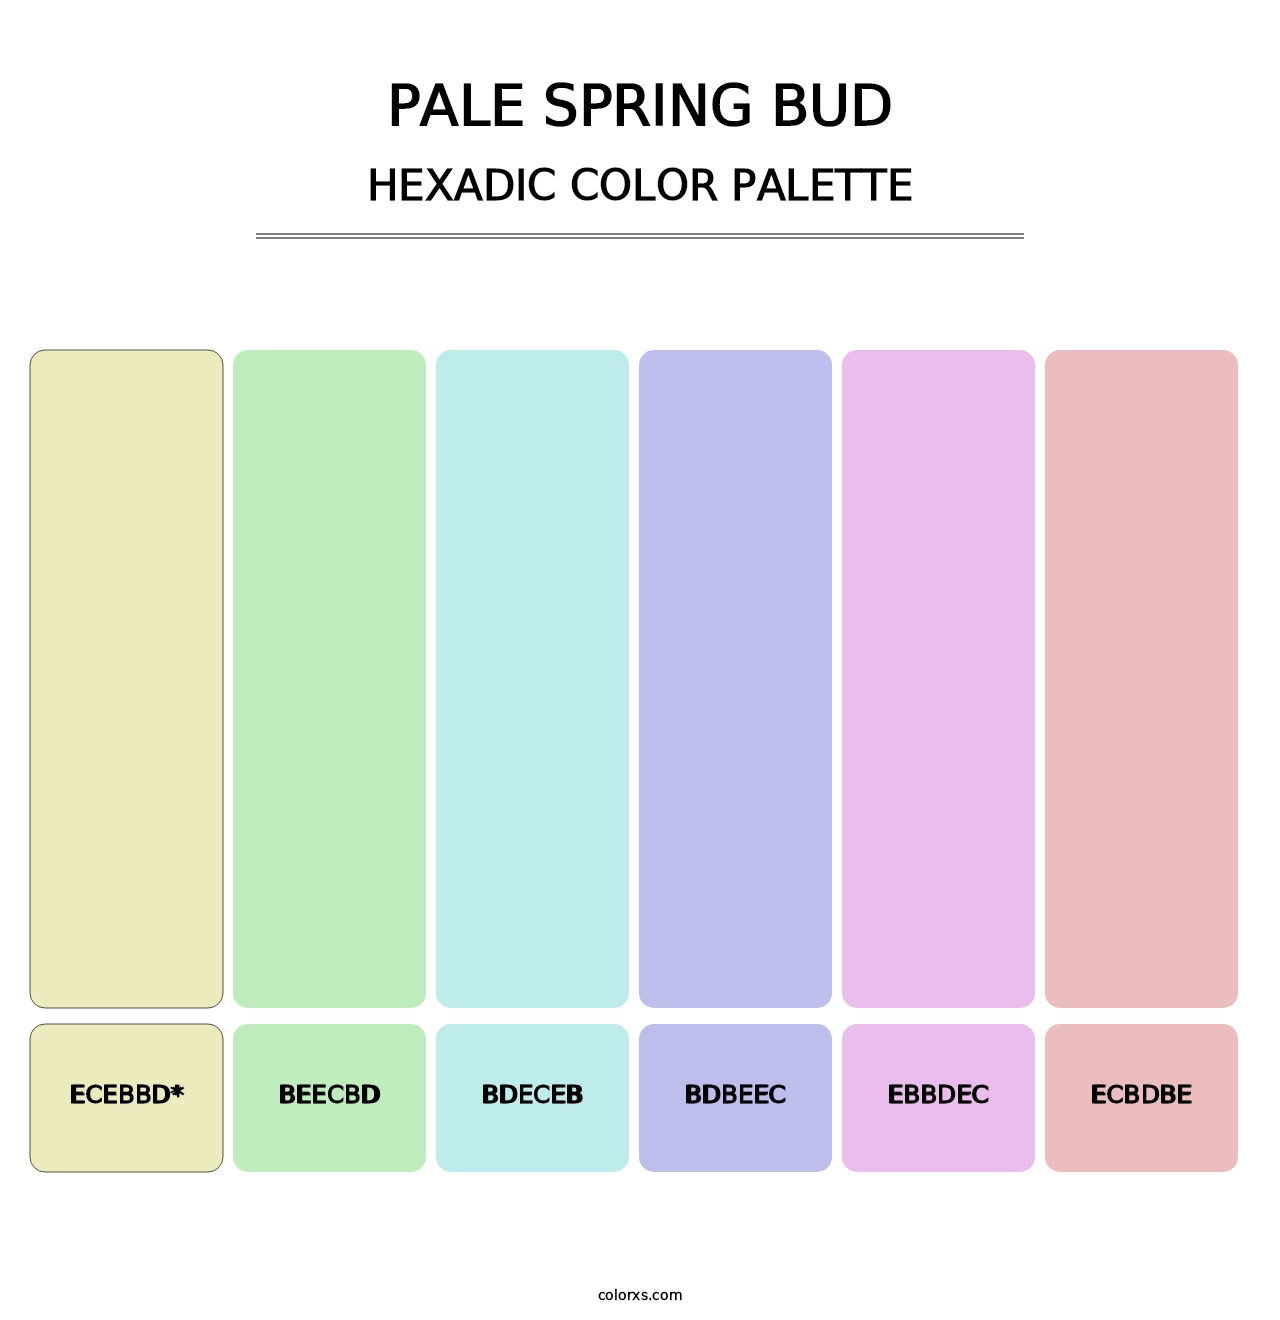 Pale Spring Bud - Hexadic Color Palette